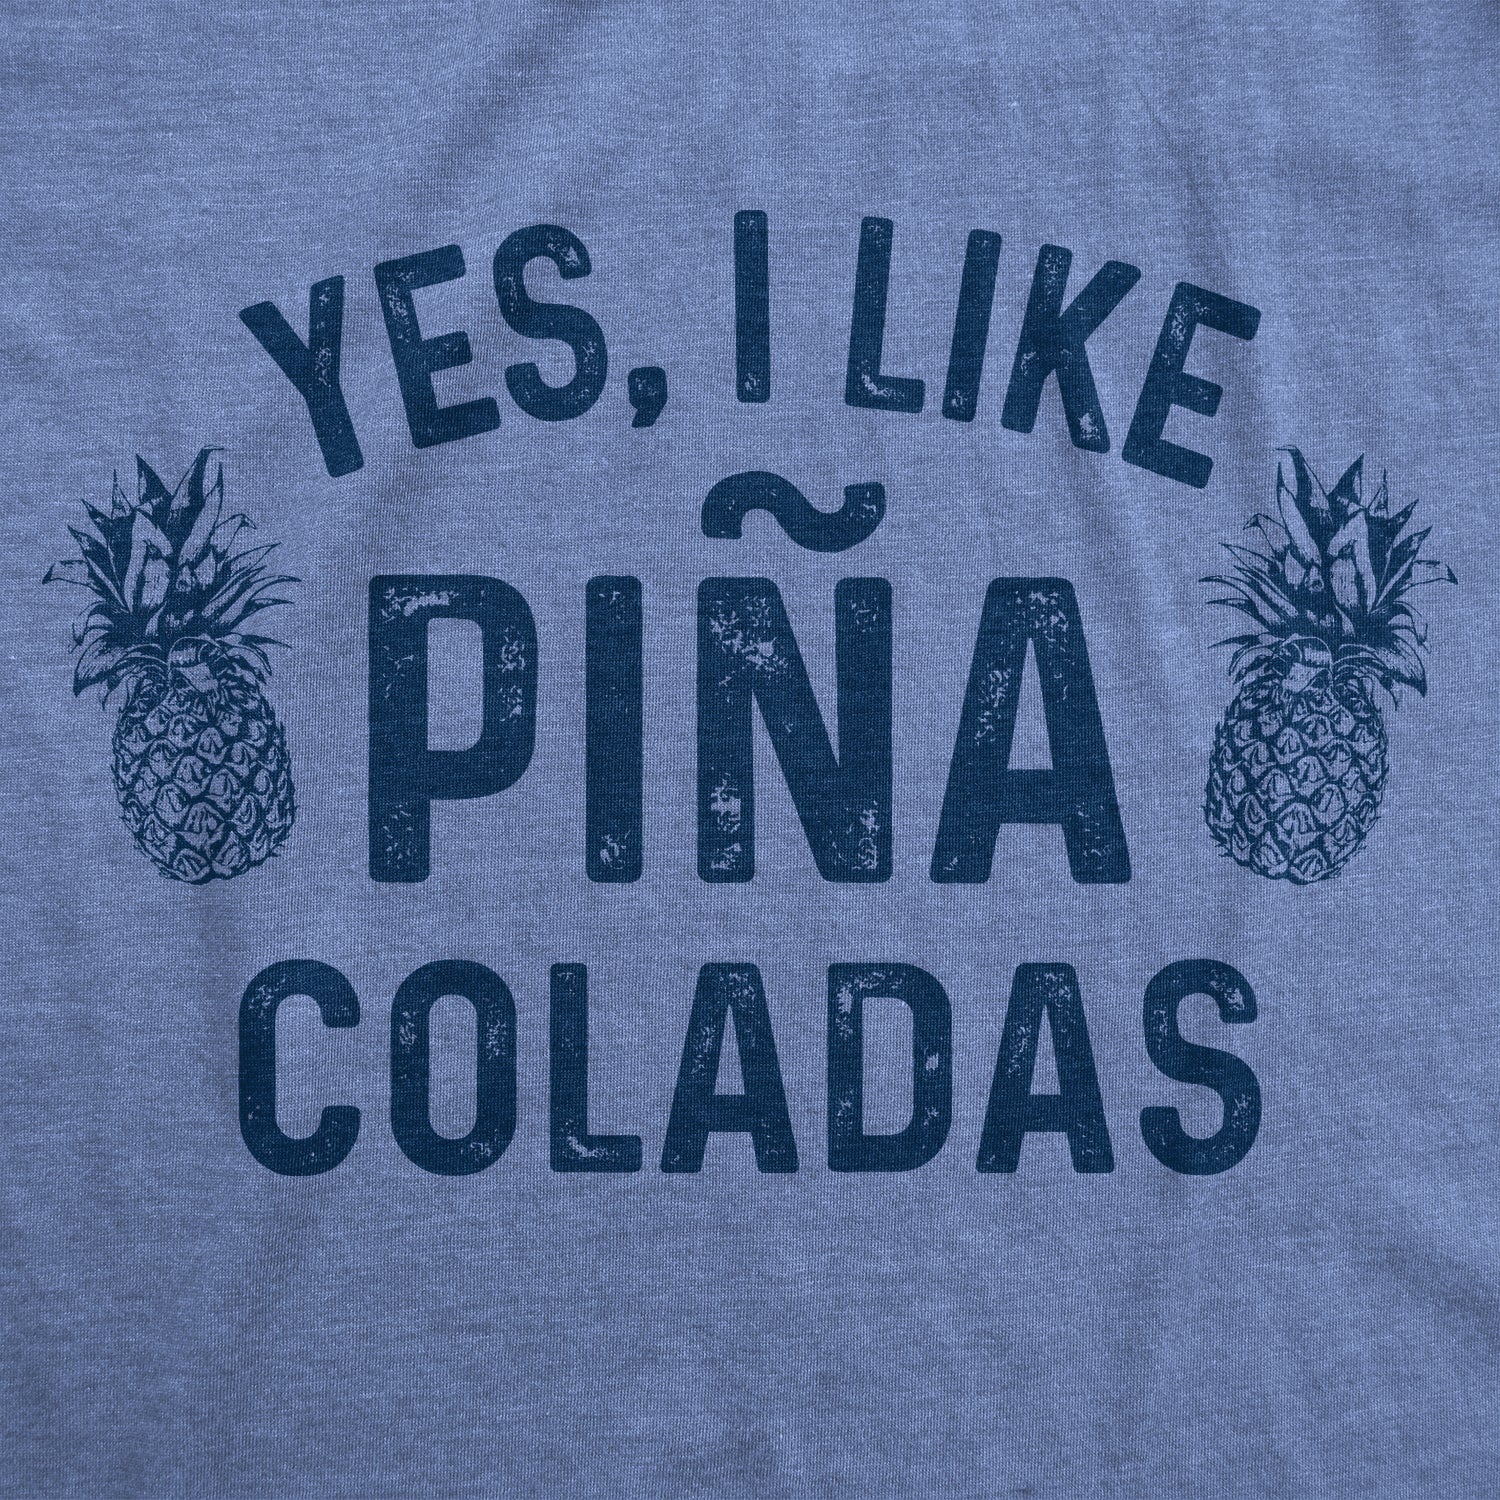 Funny Heather Light Blue - Pina Colada Yes, I Like Pina Coladas Womens T Shirt Nerdy Vacation Drinking Tee